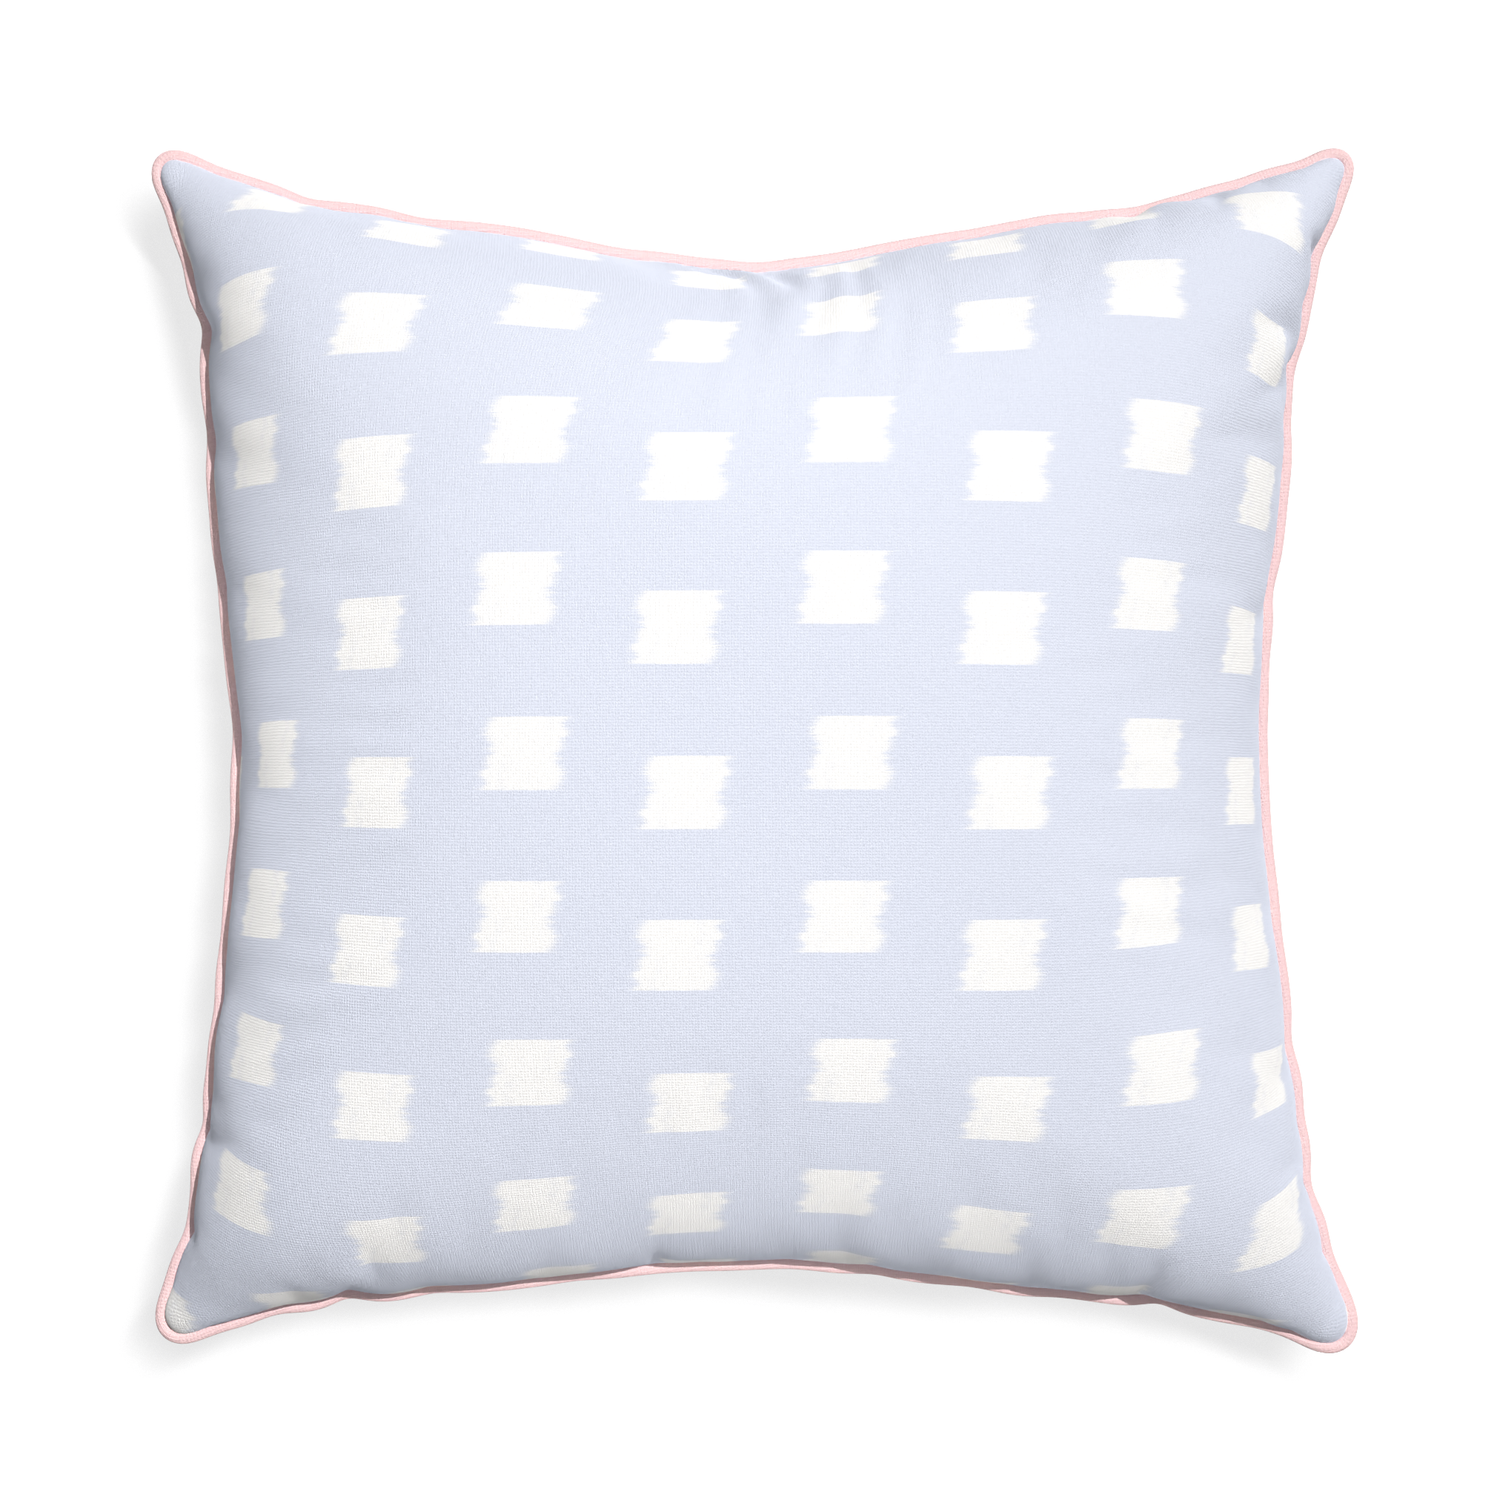 Euro-sham denton custom pillow with petal piping on white background